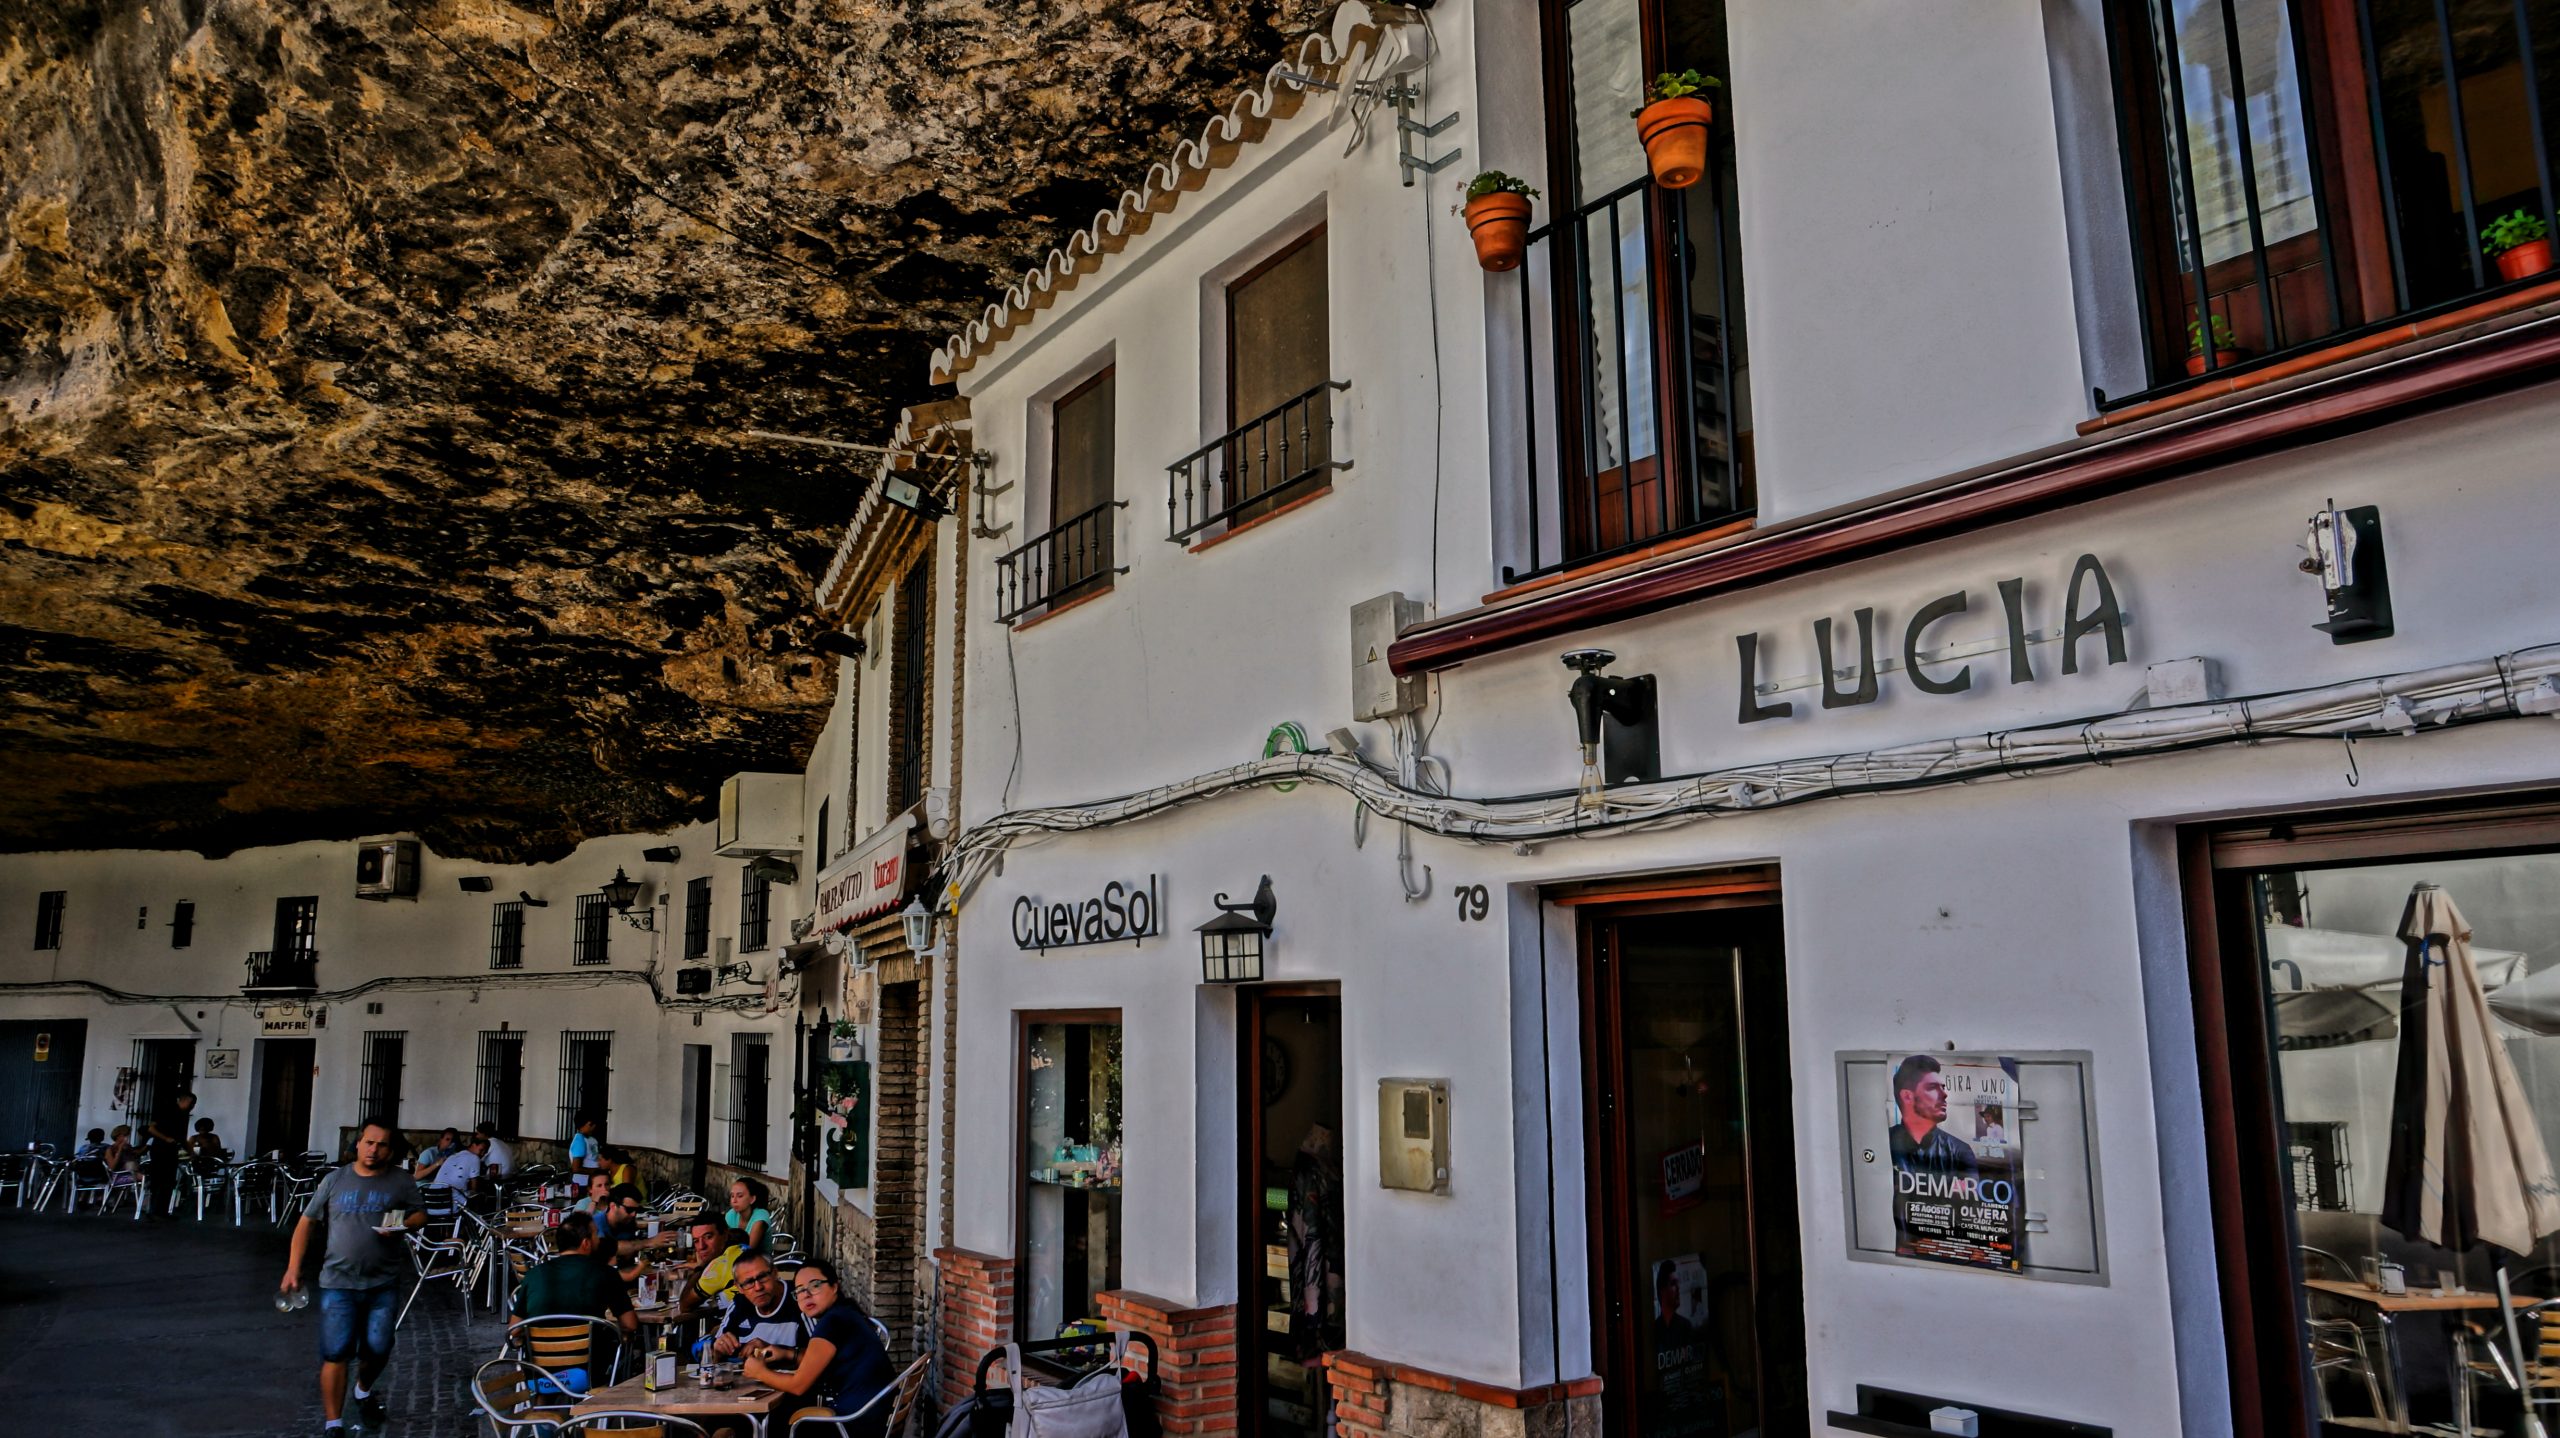 The little whitewashed village built into the rocks alongside the river; Enjoy your lunch under the rocks of Setenil de las Bodegas